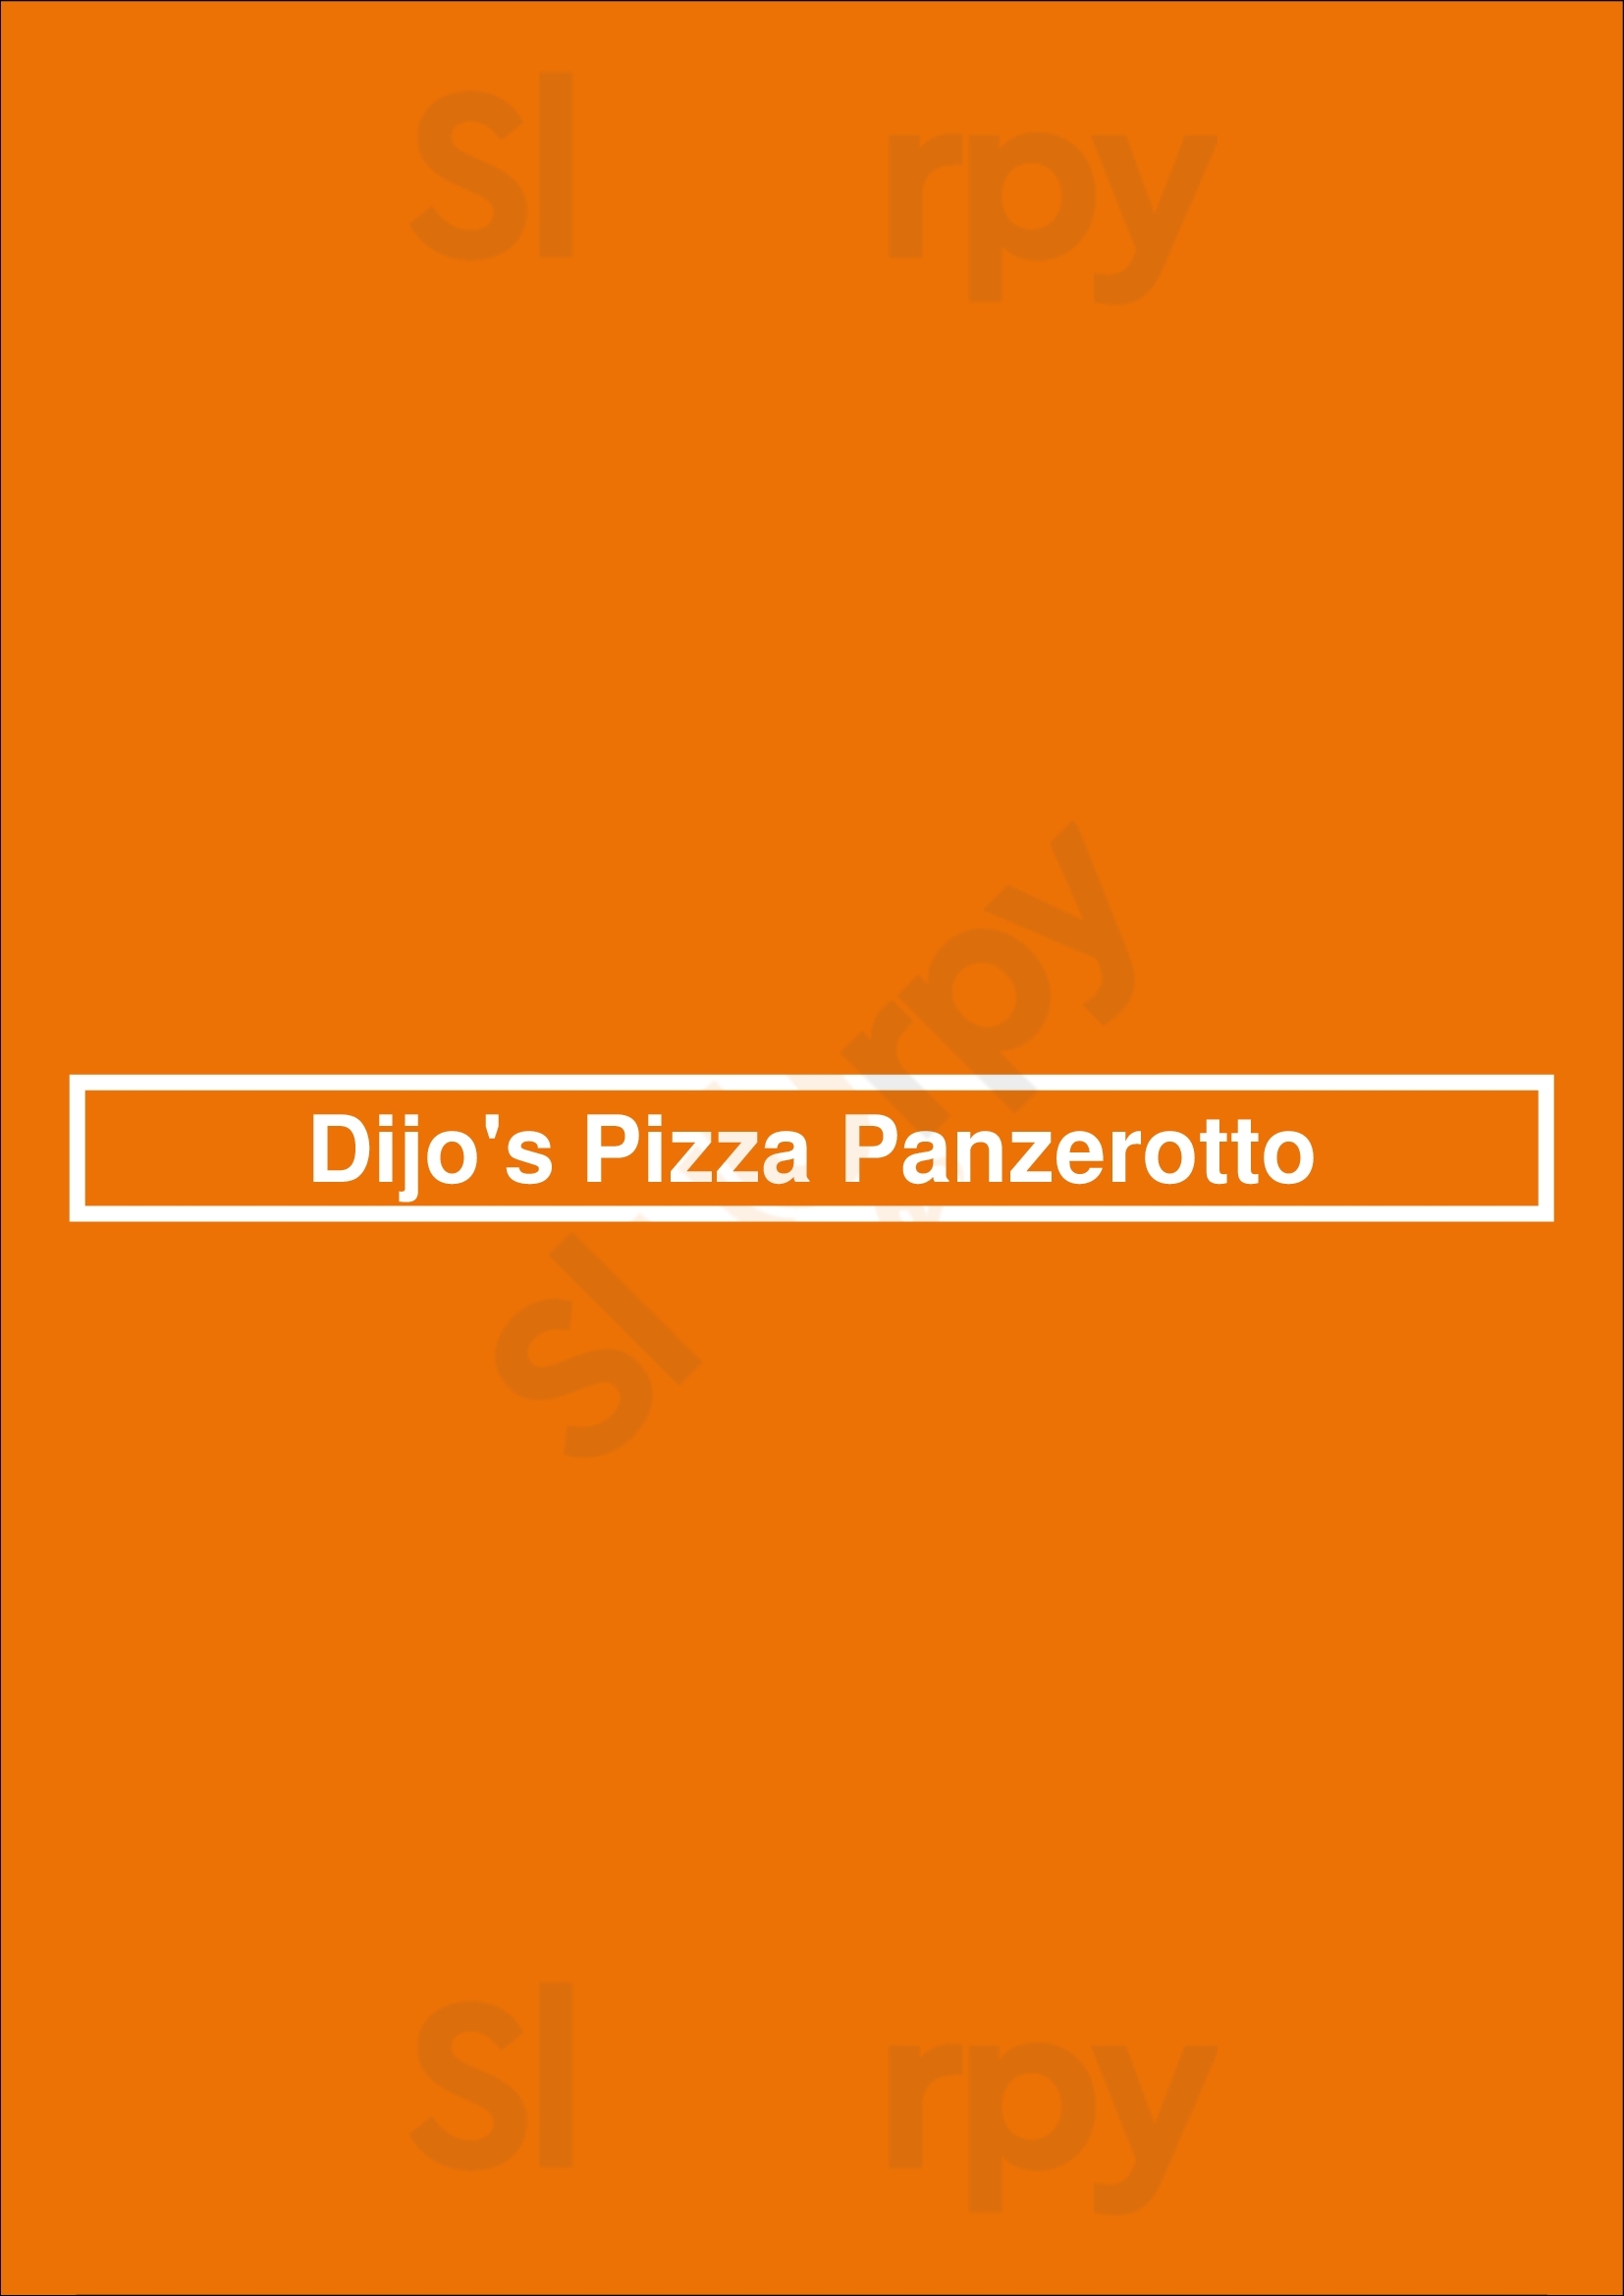 Dijo's Pizza Panzerotto Vancouver Menu - 1